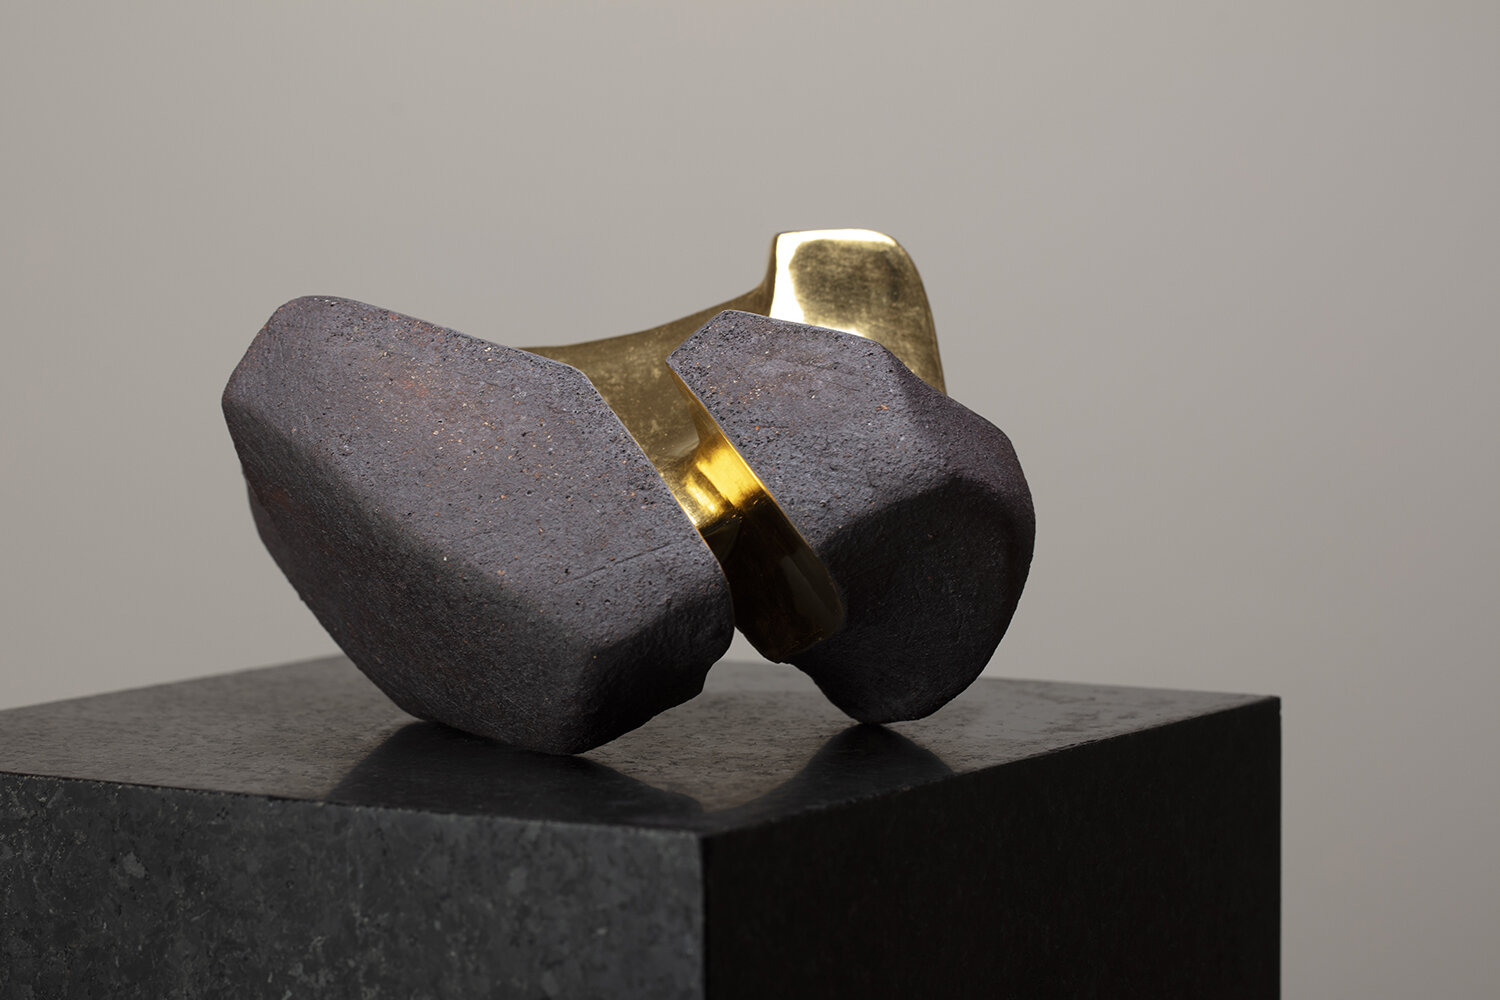 jorge-yazpik-untitled-3-sculptures-piece2-3-solid-clay-goldleaf-2020-marion-friedmann-gallery.jpg